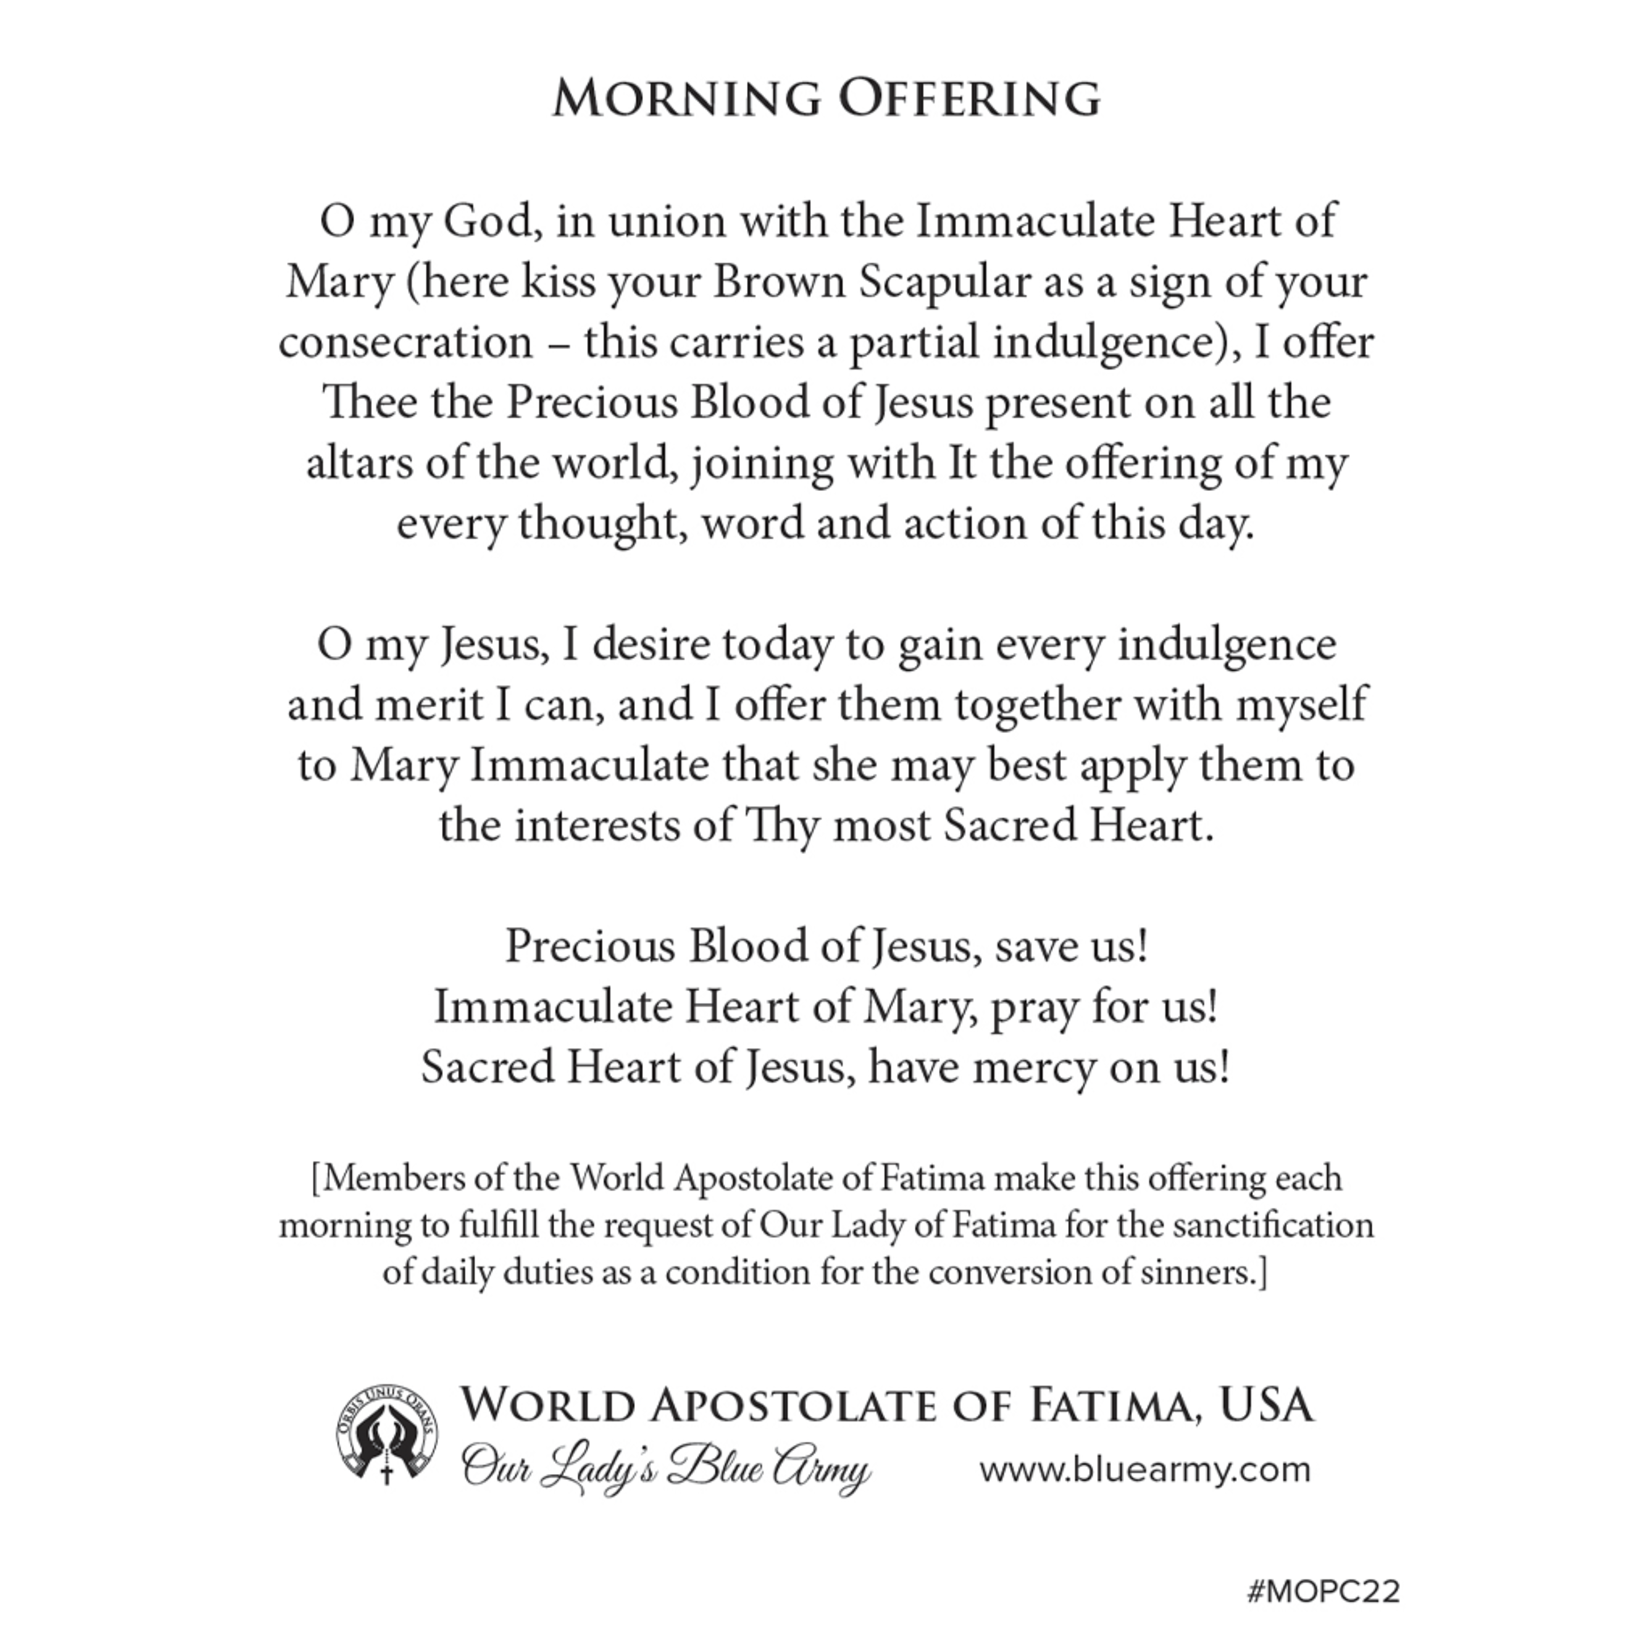 MOPC22 - Morning Offering Prayer Card